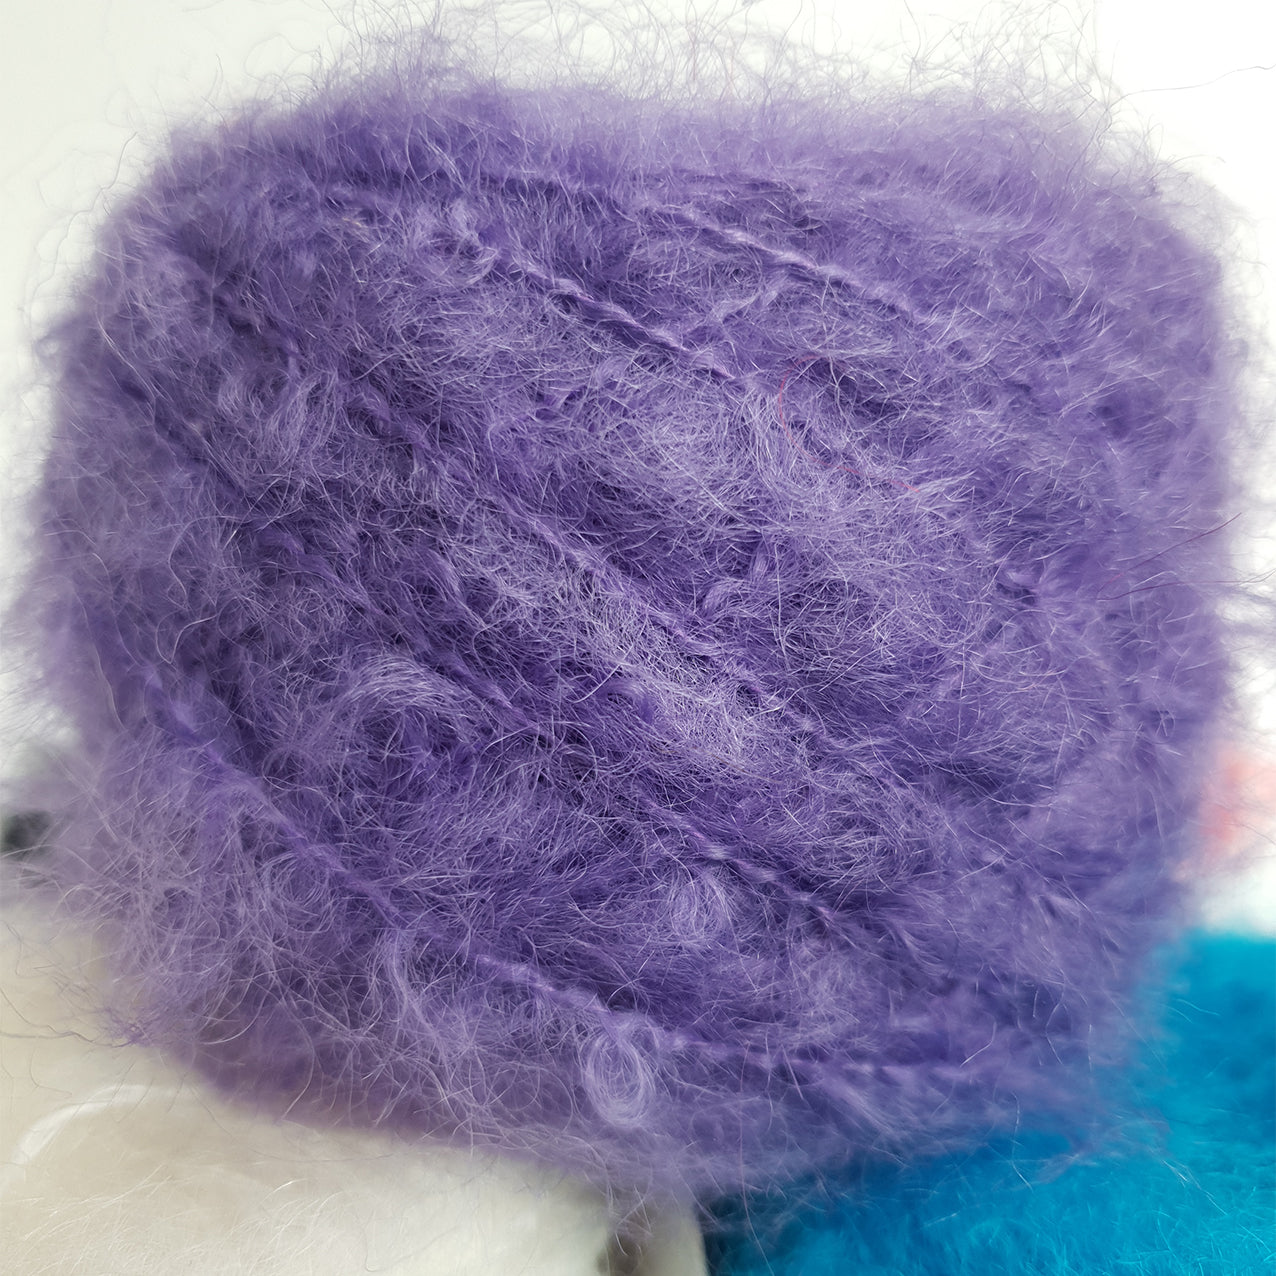 Brushed Mohair Yarn, Purple Haze, 50g Ball